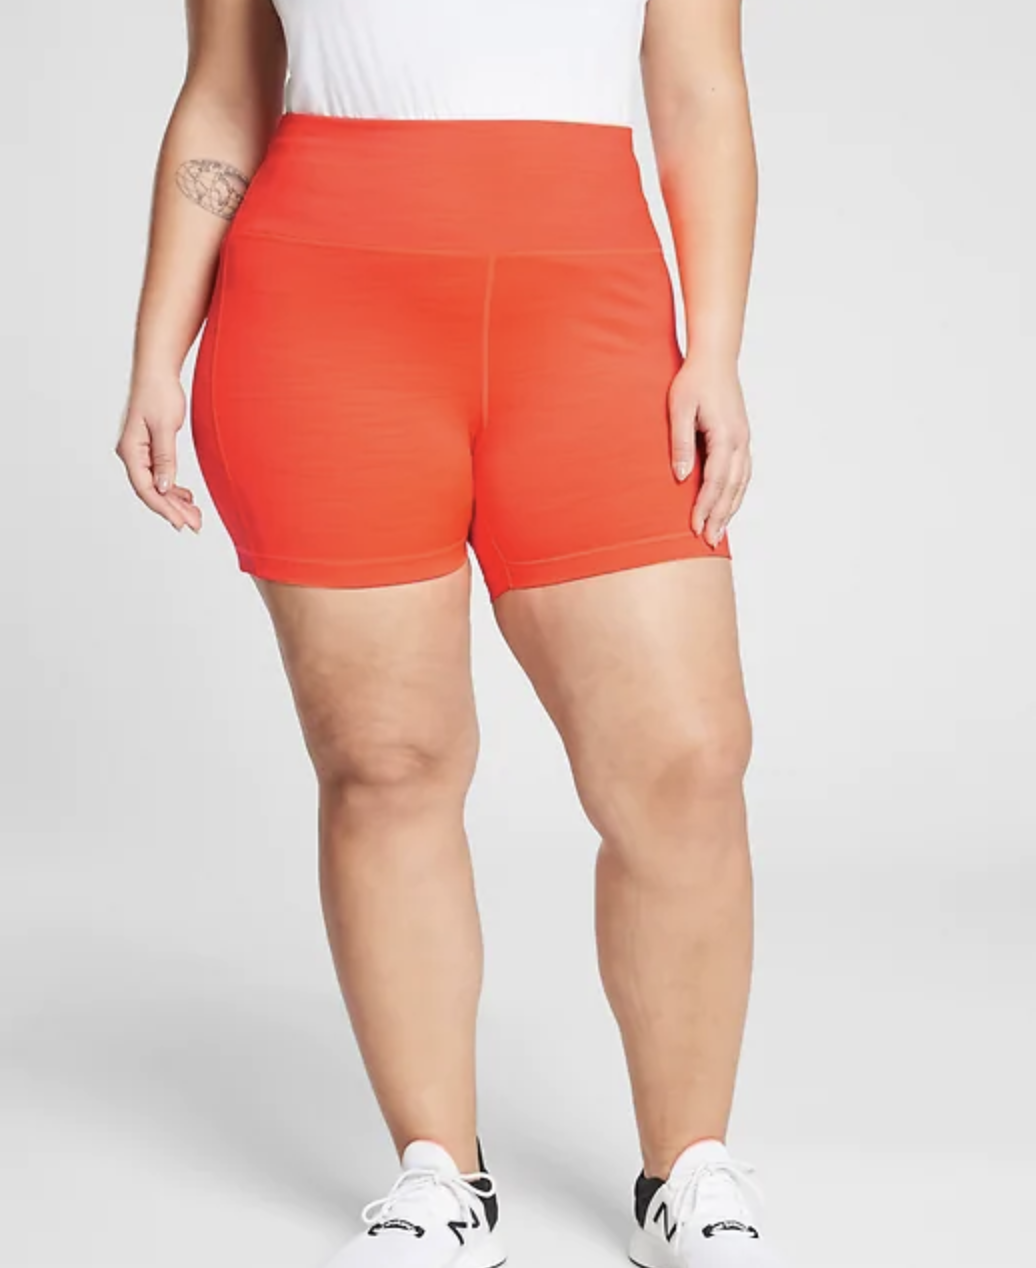 orange bib shorts